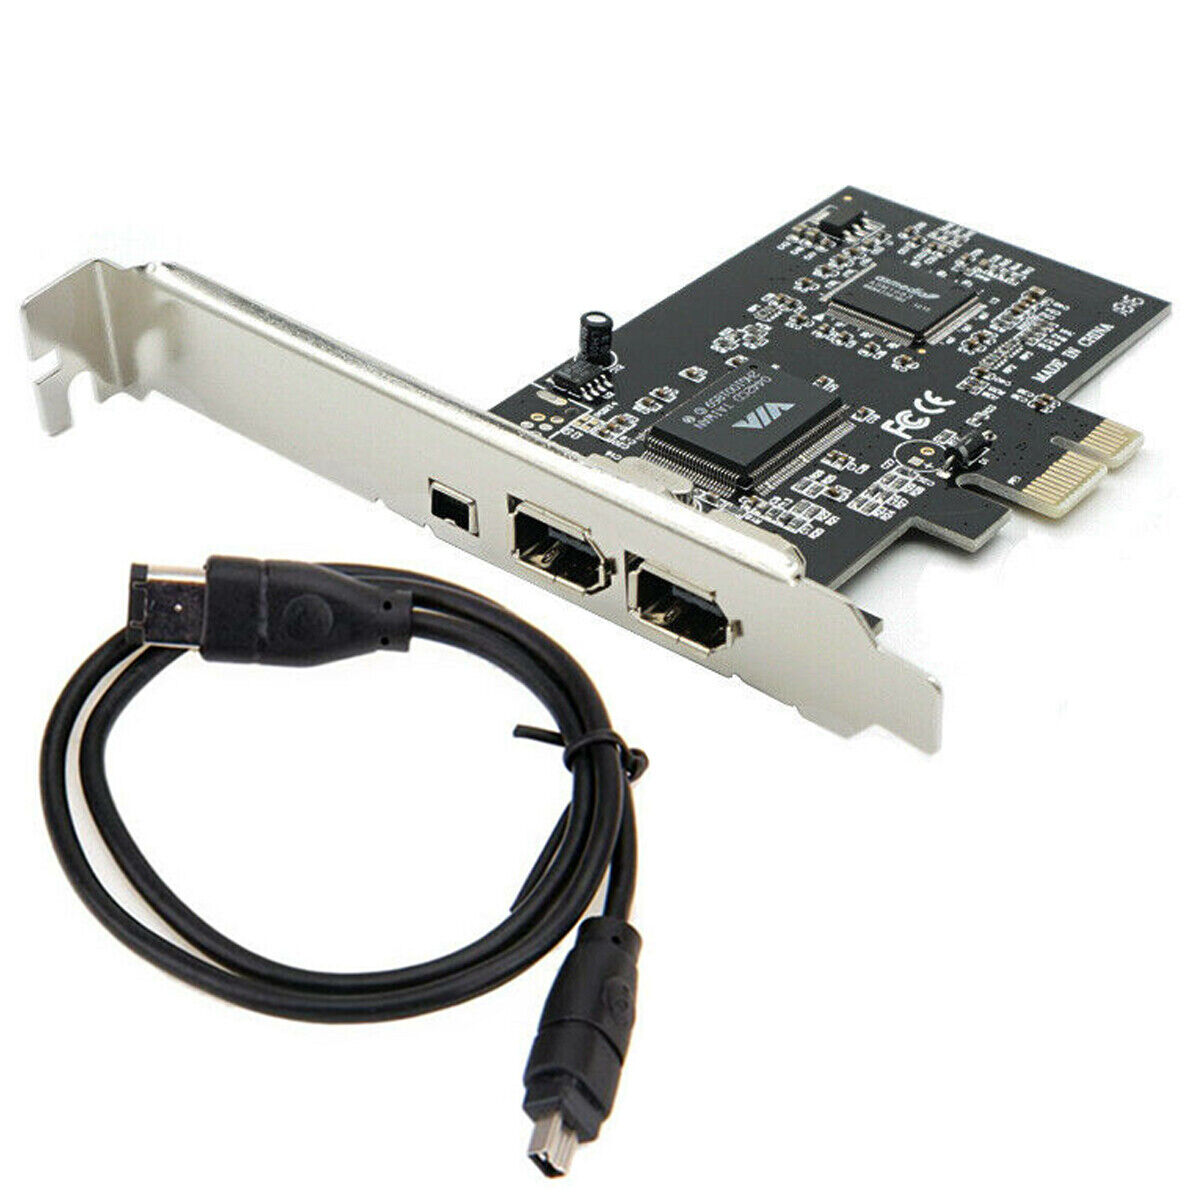 Vrijwillig Opmerkelijk rechter PCIE PCI-E Firewire IEEE 1394 2+1 3 Port Card Work With Windows 7 32/64 New  | eBay